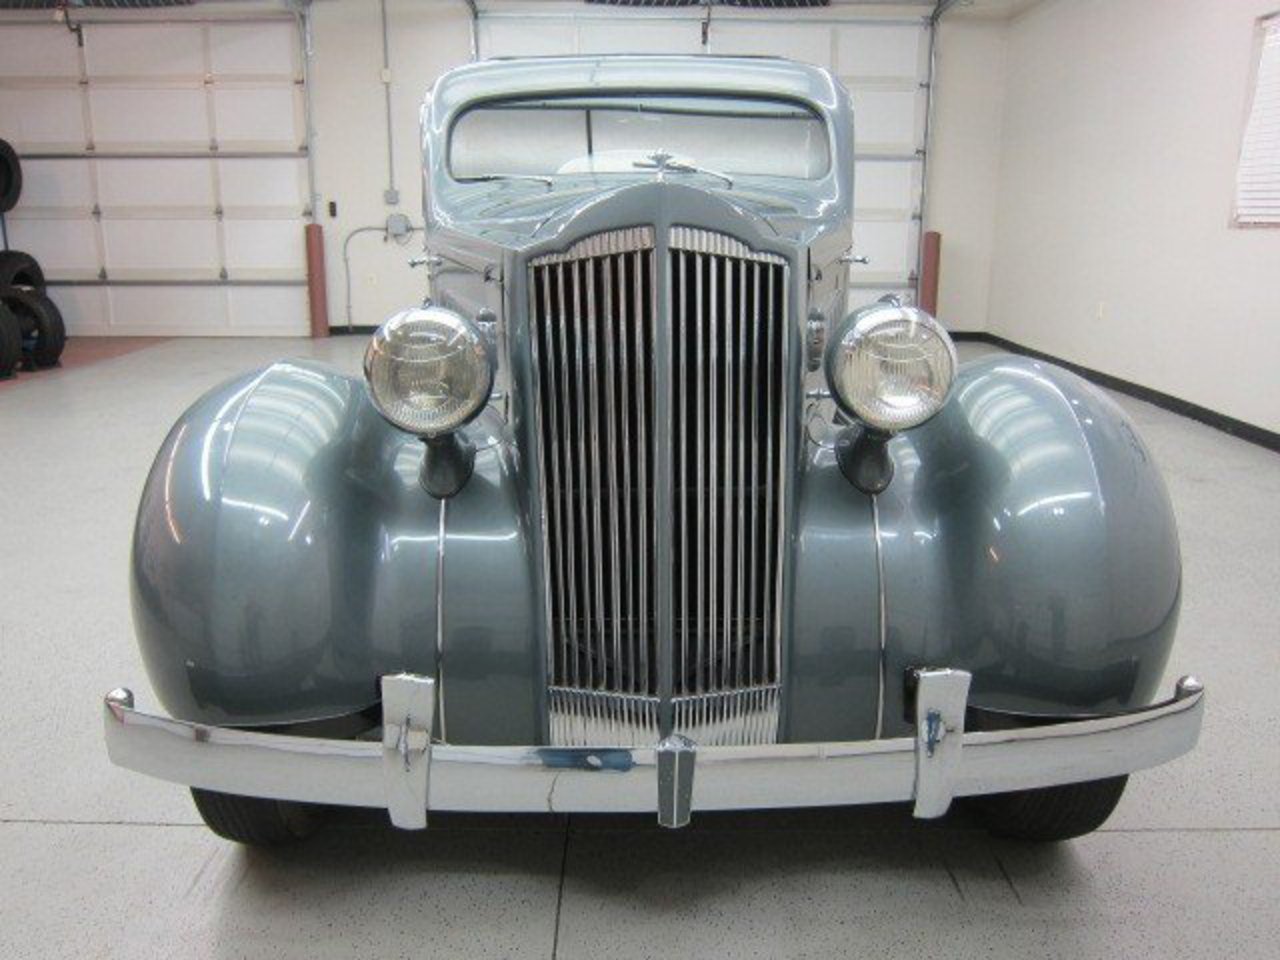 Packard 120 4dr sedan